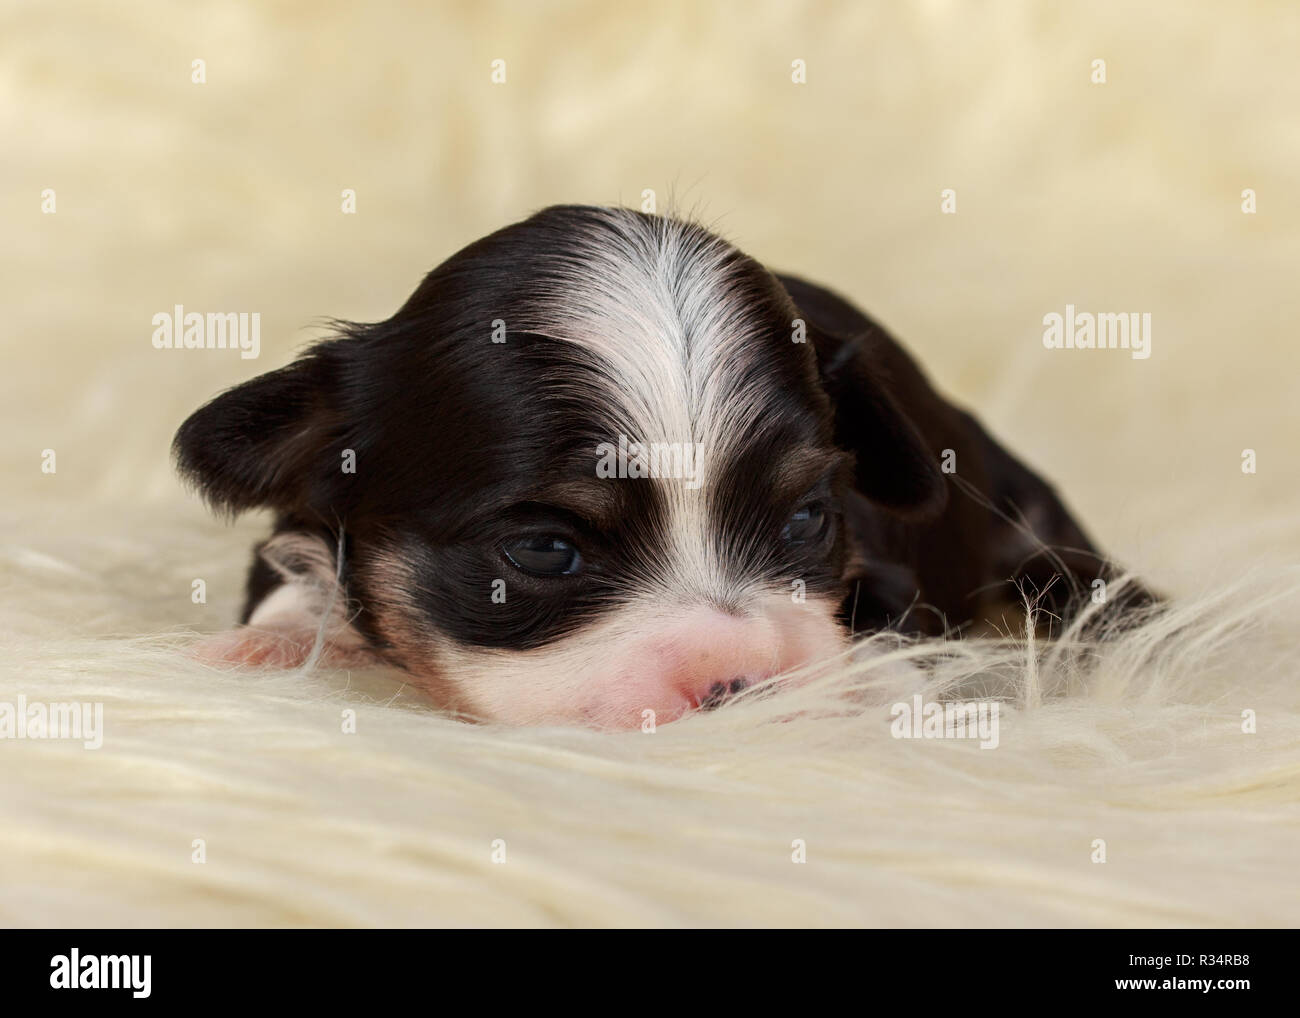 havanese puppy 14 days old Stock Photo